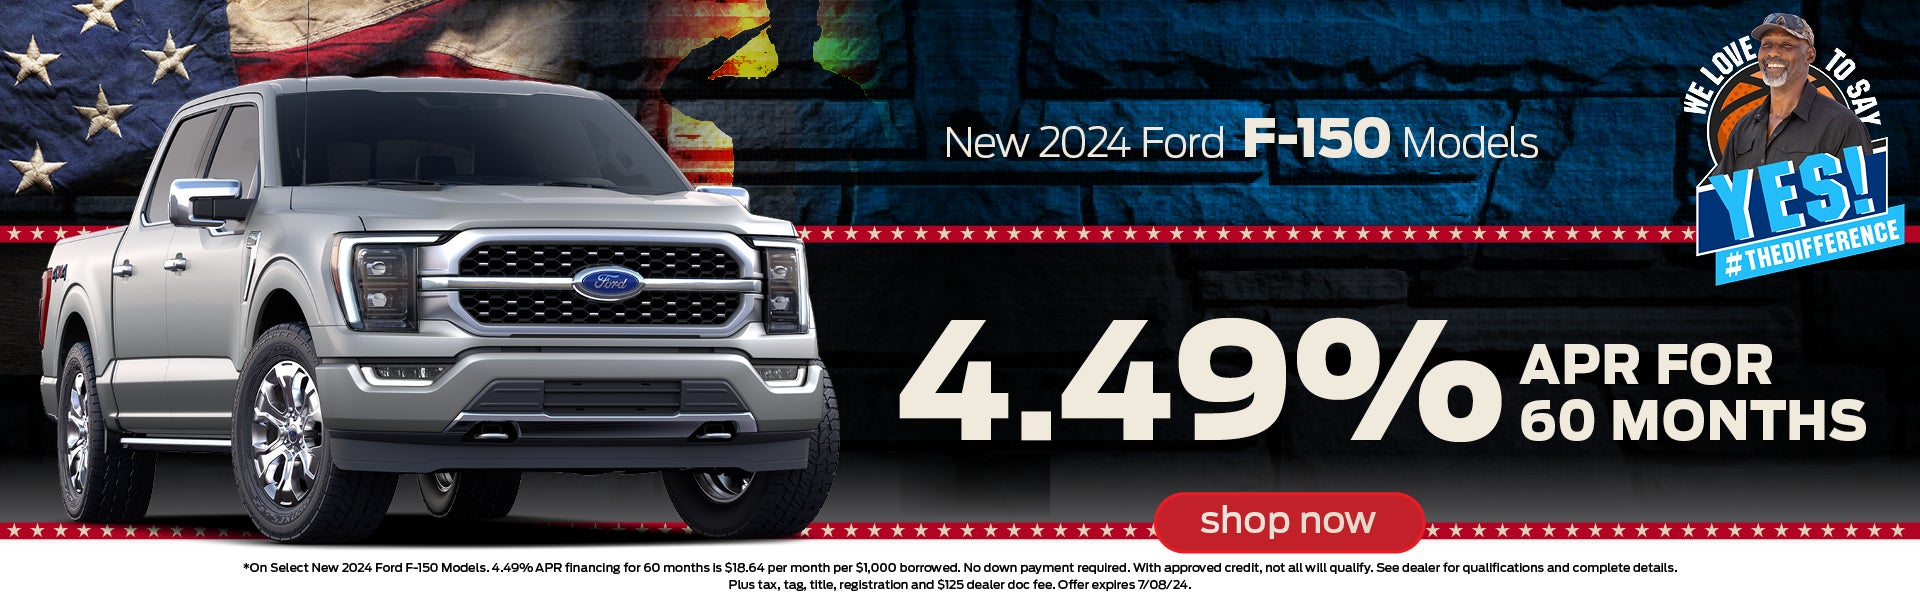 New 2024 Ford F-150 Models in El Dorado AR